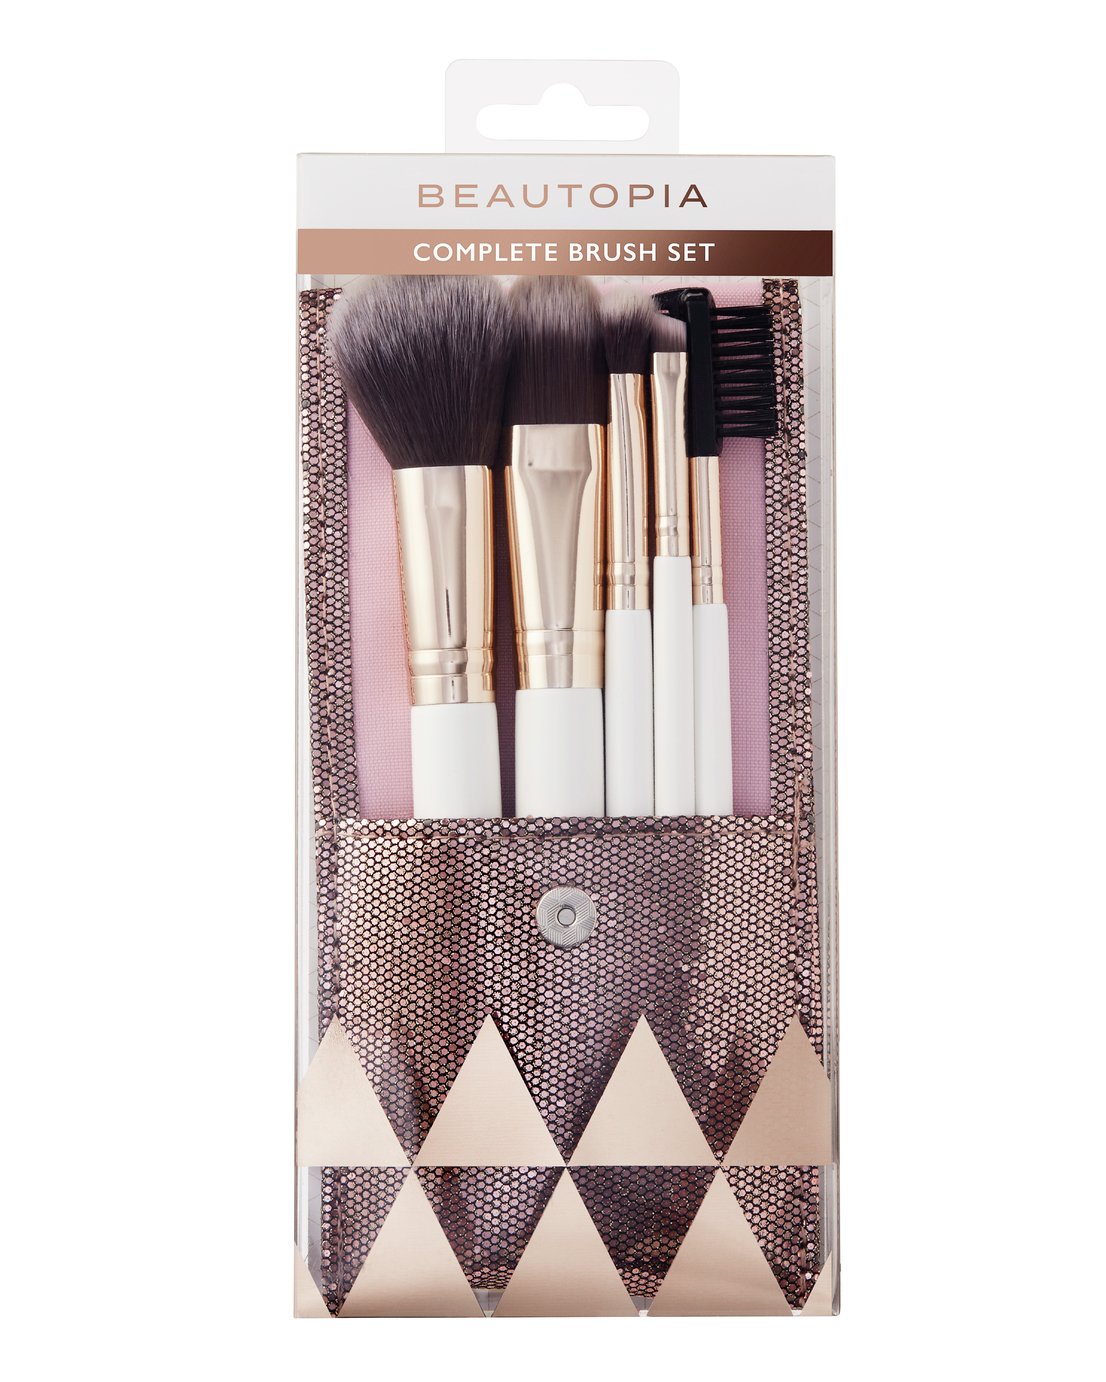 Beautopia Complete Brush Set